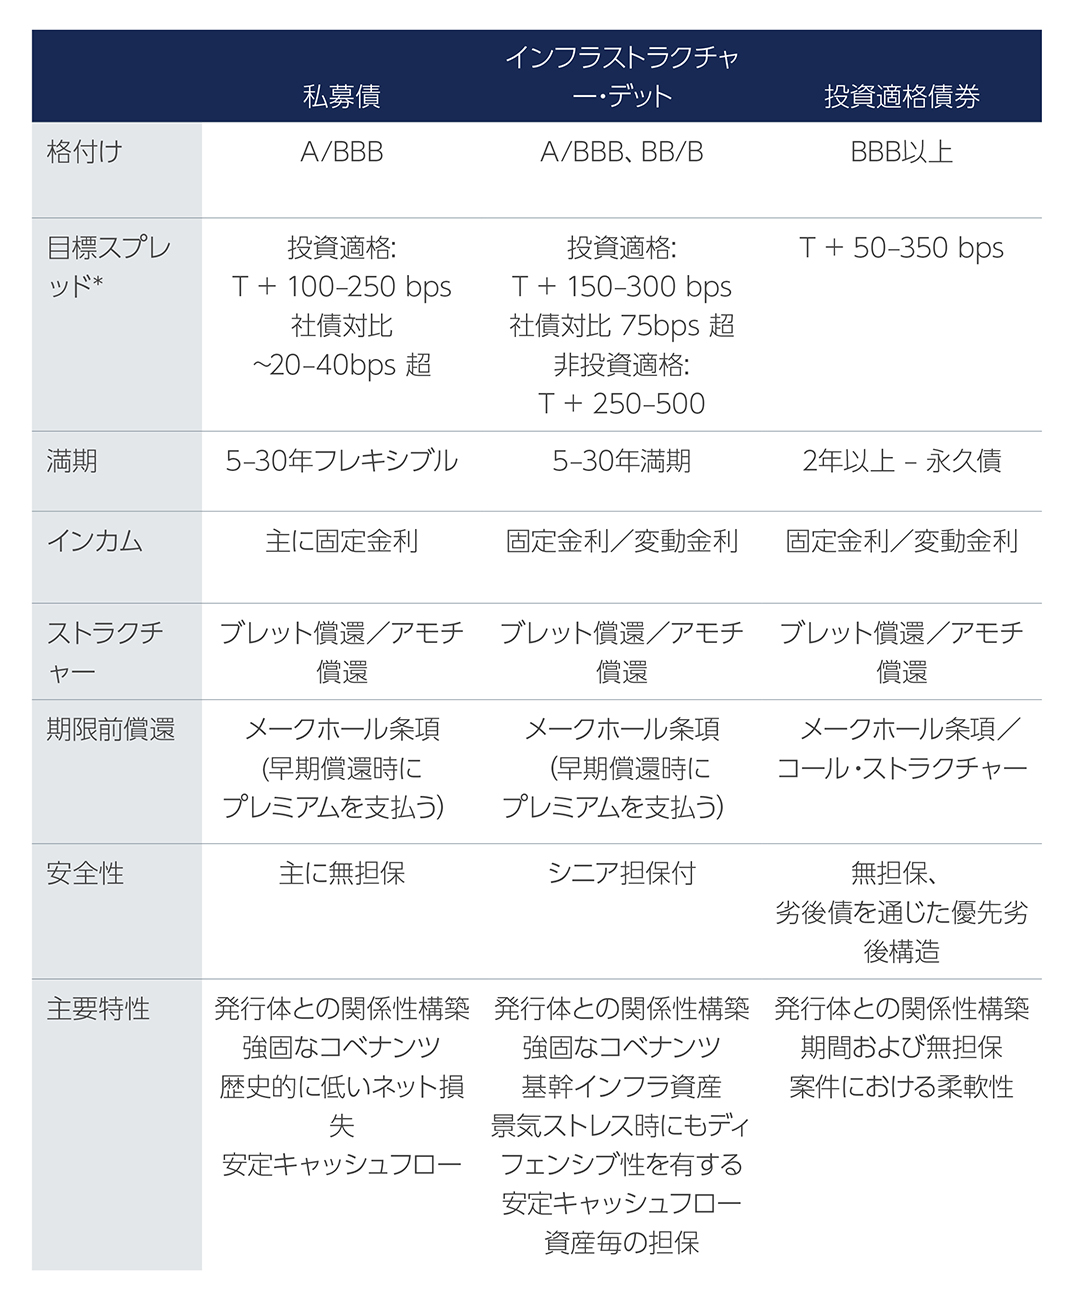 the-widening-appeal-chart1-jp.jpg